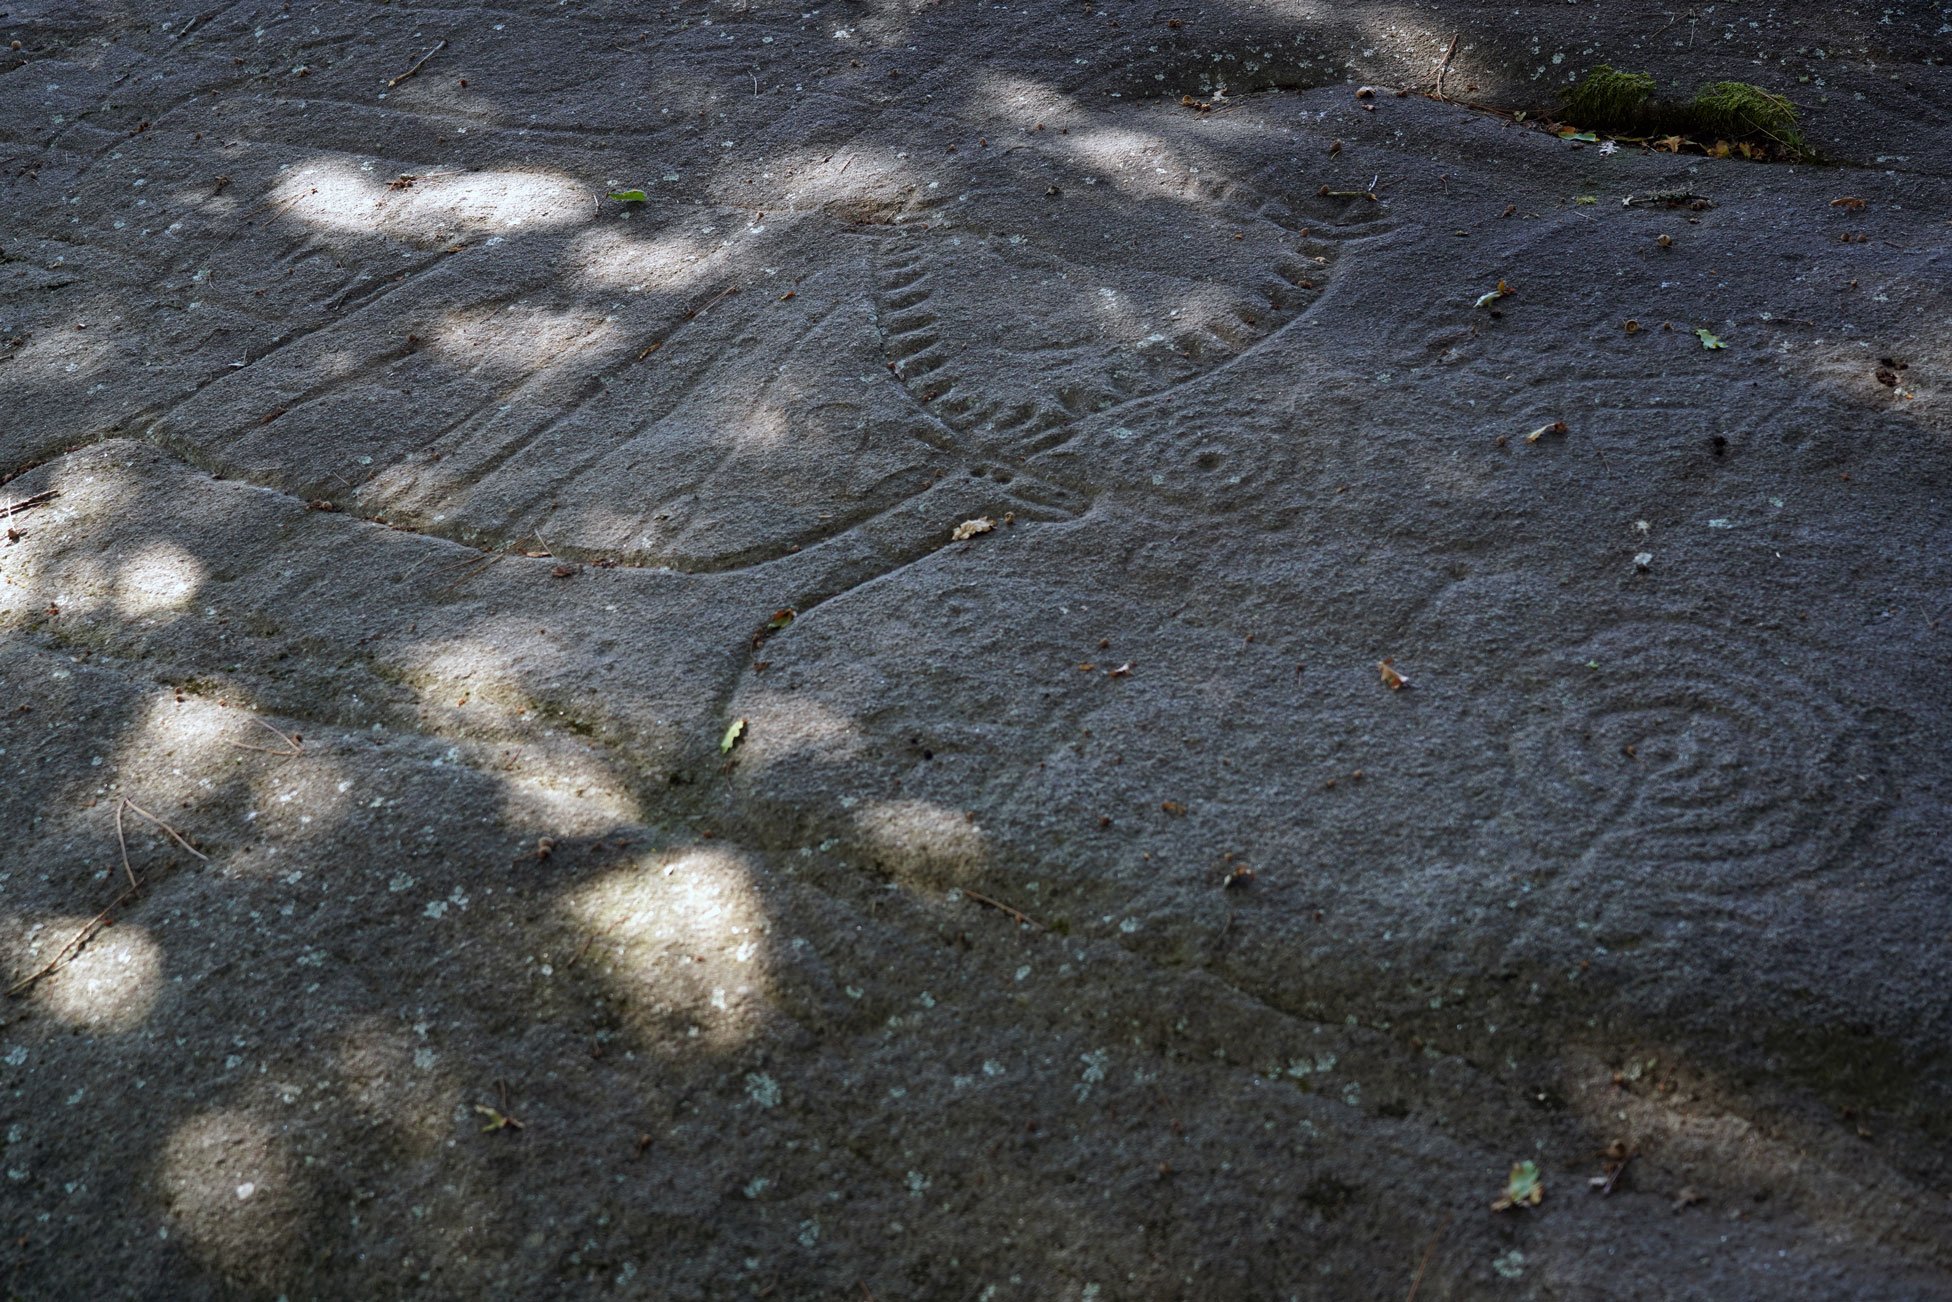 Petroglifo Arte rupestre Galicia